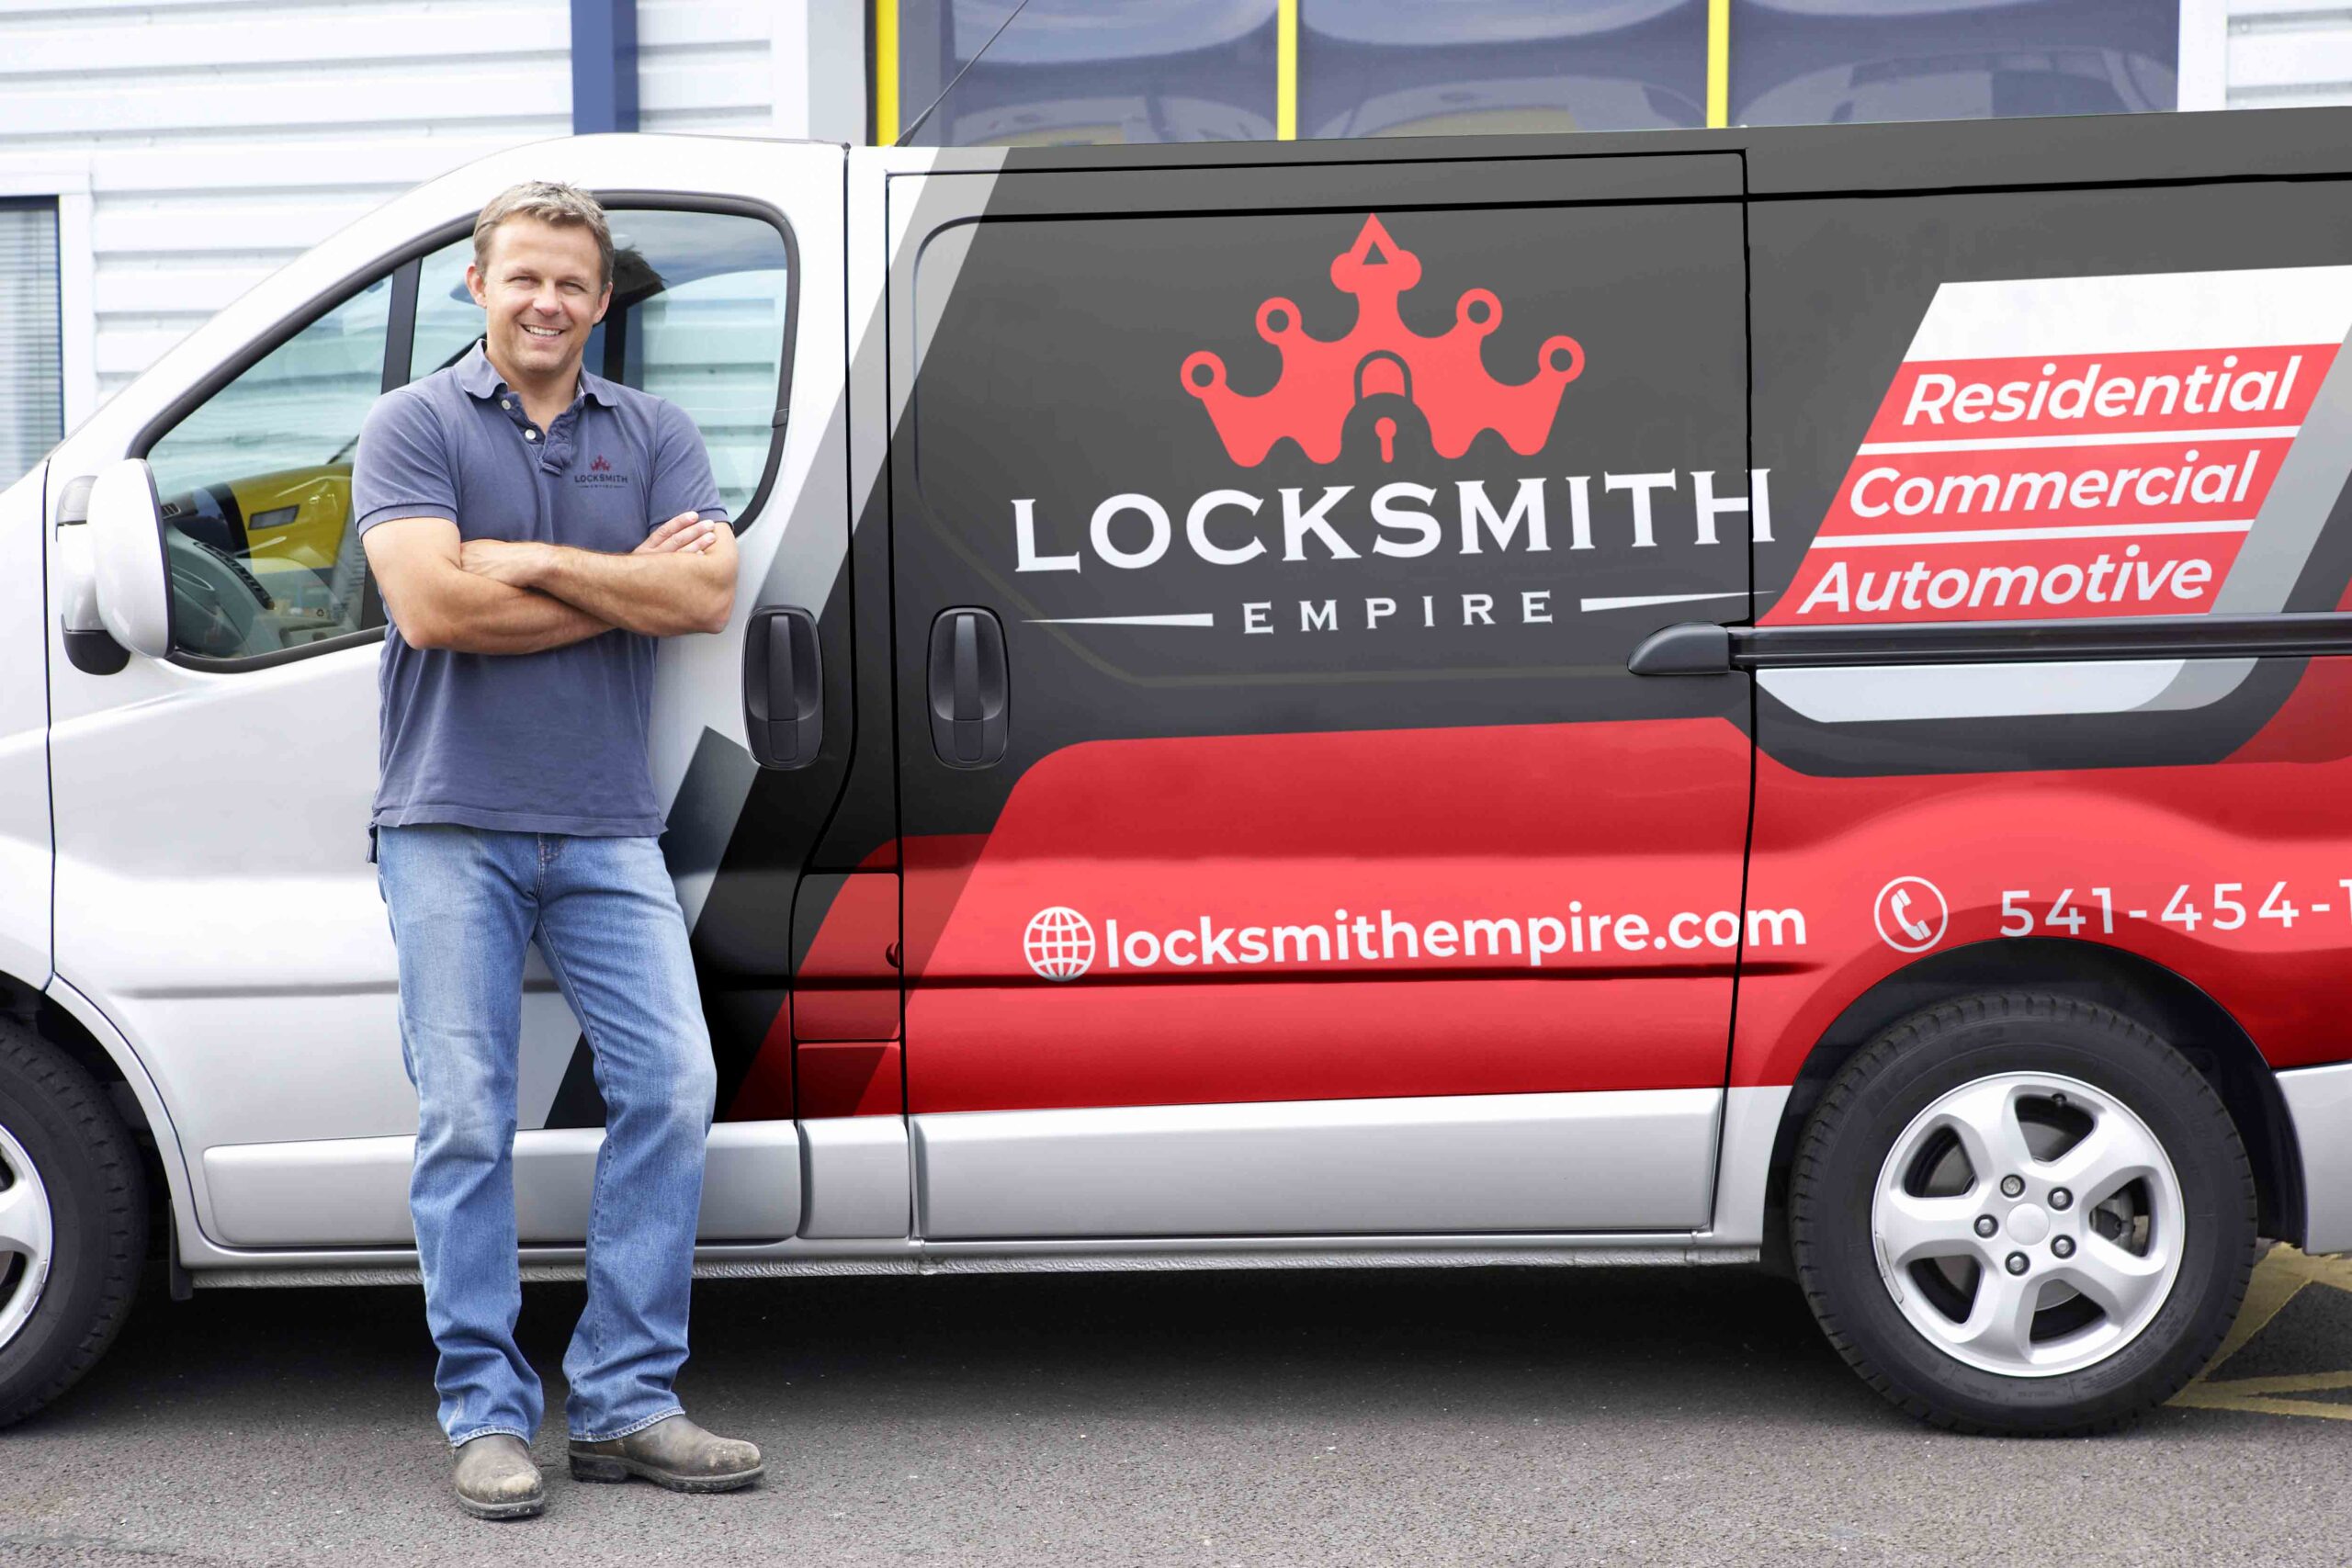 Locksmith with his van